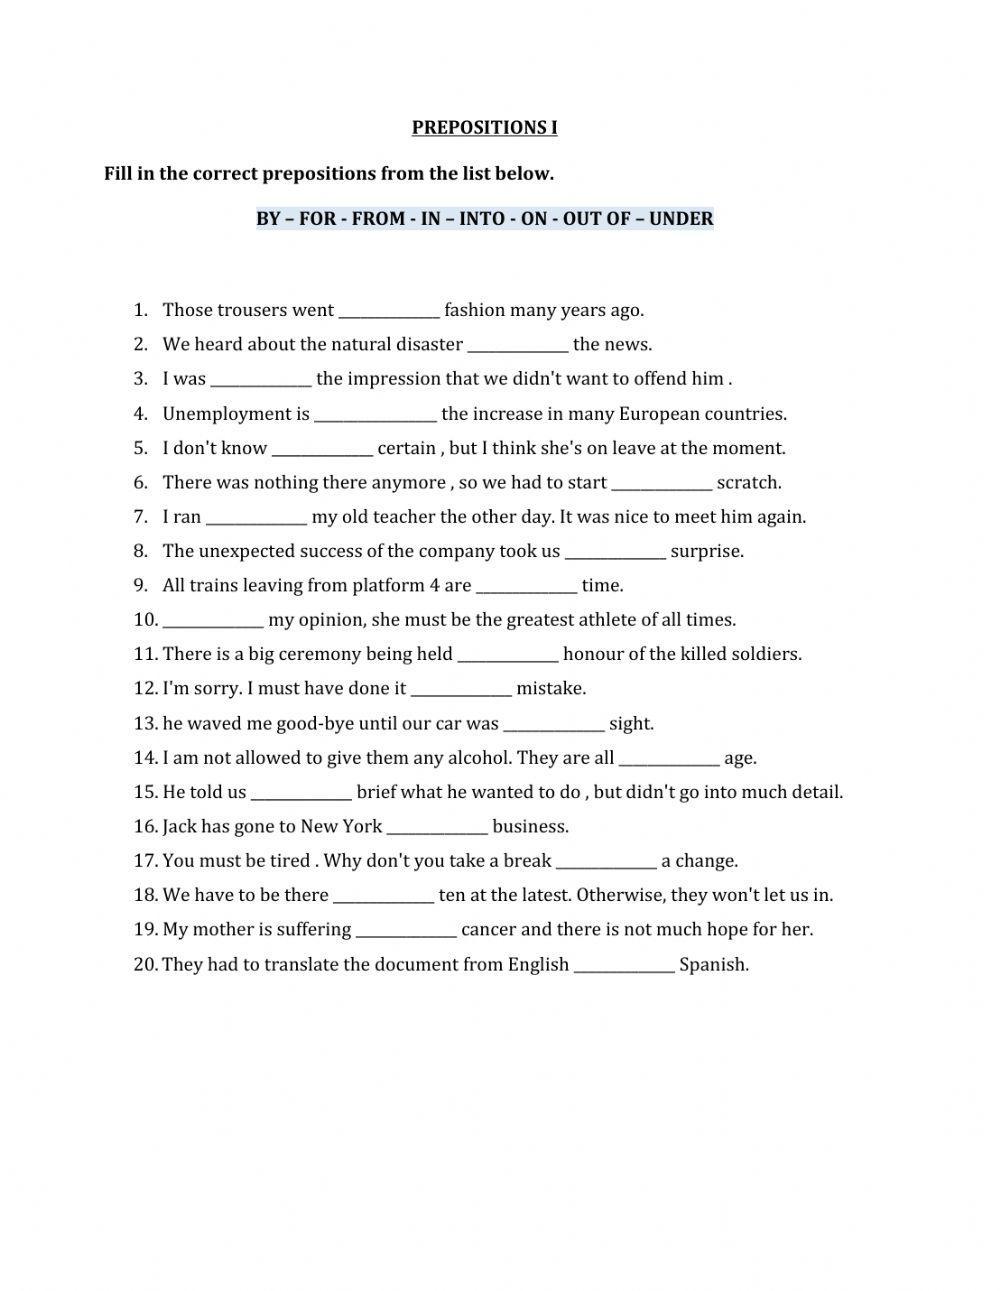 Prepositions 1